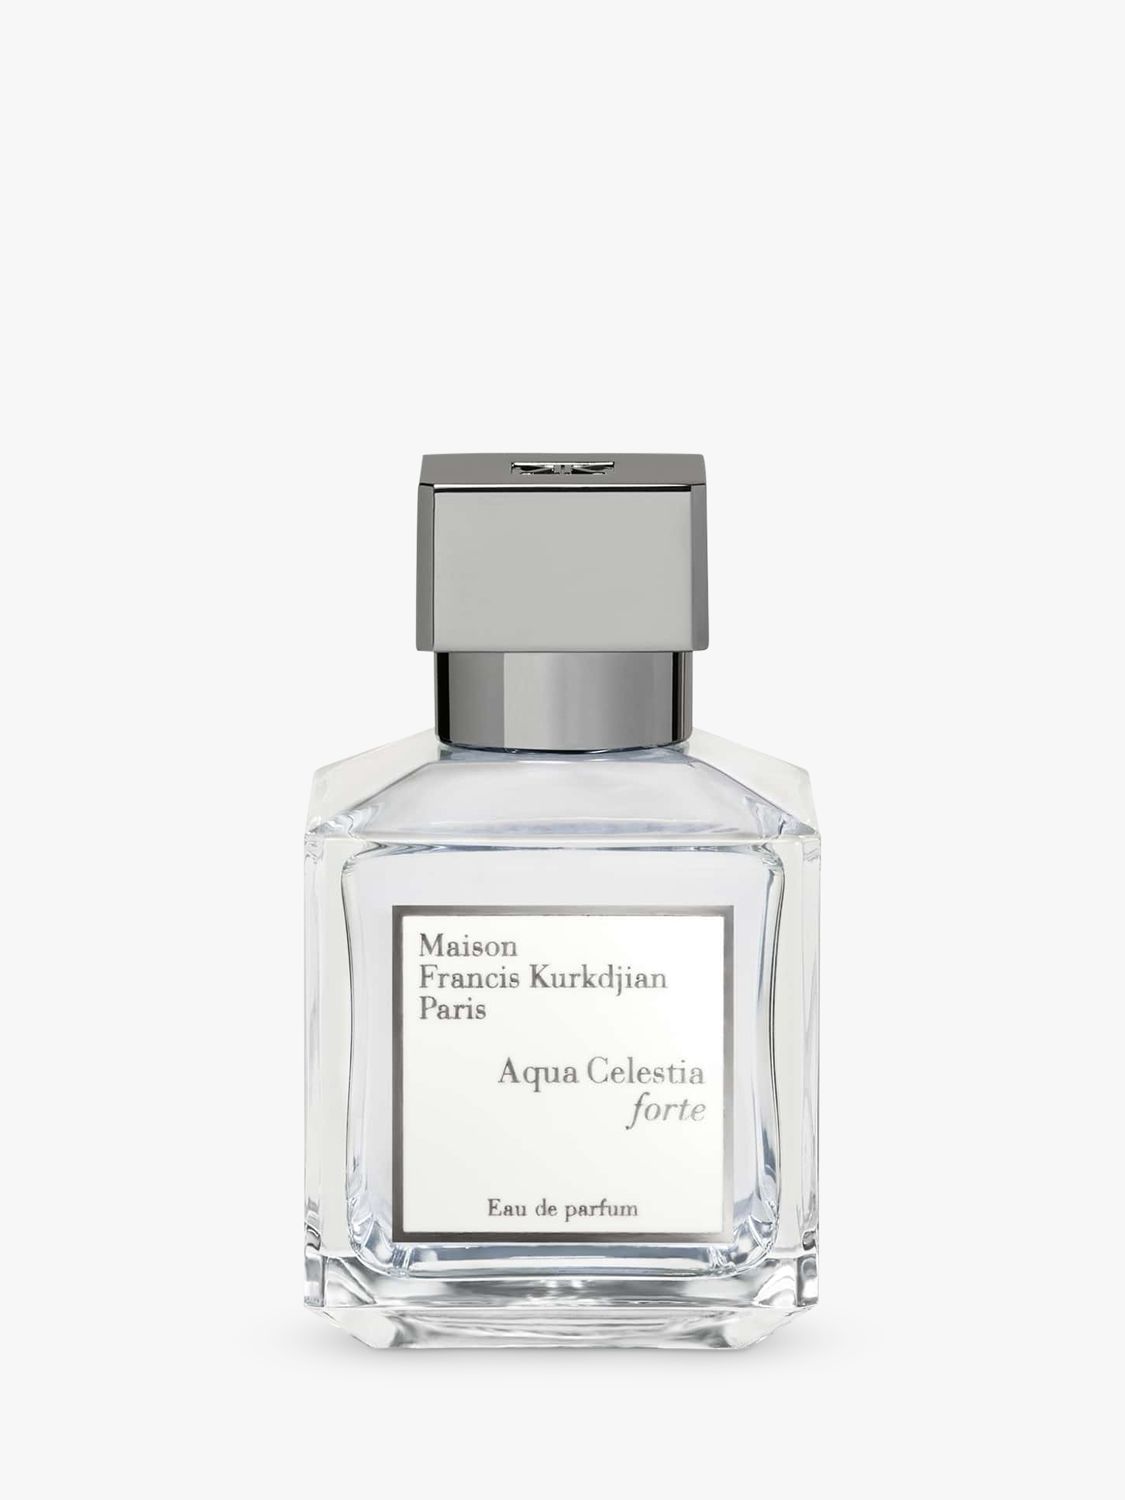 Maison Francis Kurkdjian Aqua Celestia Forte Eau de Parfum, 70ml